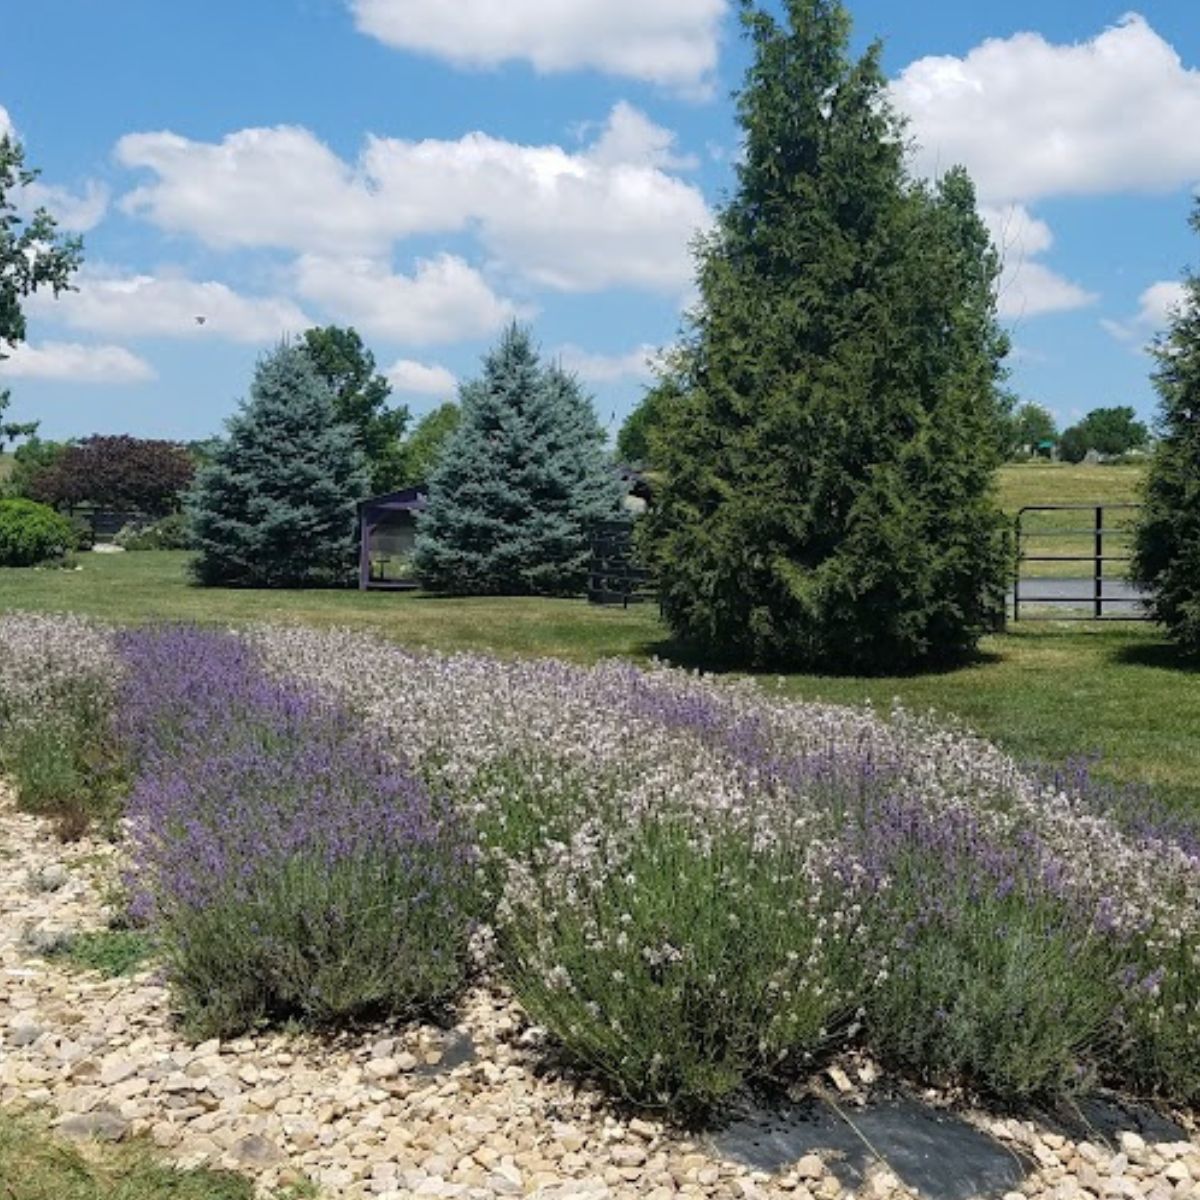 Rock is used as mulch in a lavender garden.